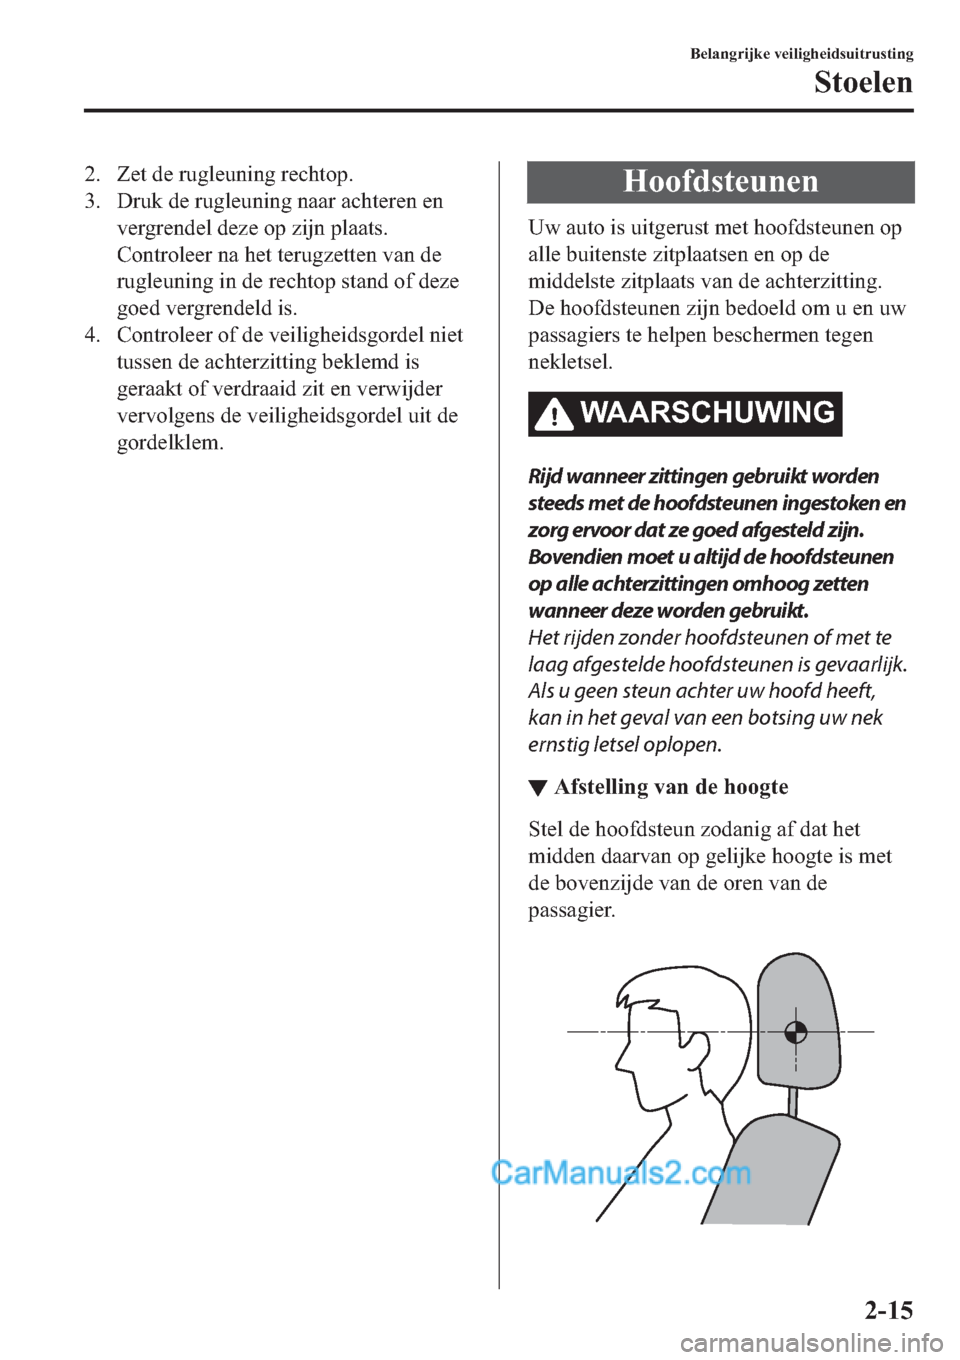 MAZDA MODEL 2 2019  Handleiding (in Dutch) �� �=�H�W��G�H��U�X�J�O�H�X�Q�L�Q�J��U�H�F�K�W�R�S�
�� ��U�X�N��G�H��U�X�J�O�H�X�Q�L�Q�J��Q�D�D�U��D�F�K�W�H�U�H�Q��H�Q
�Y�H�U�J�U�H�Q�G�H�O��G�H�]�H��R�S��]�L�M�Q��S�O�D�D�W�V�
�&�